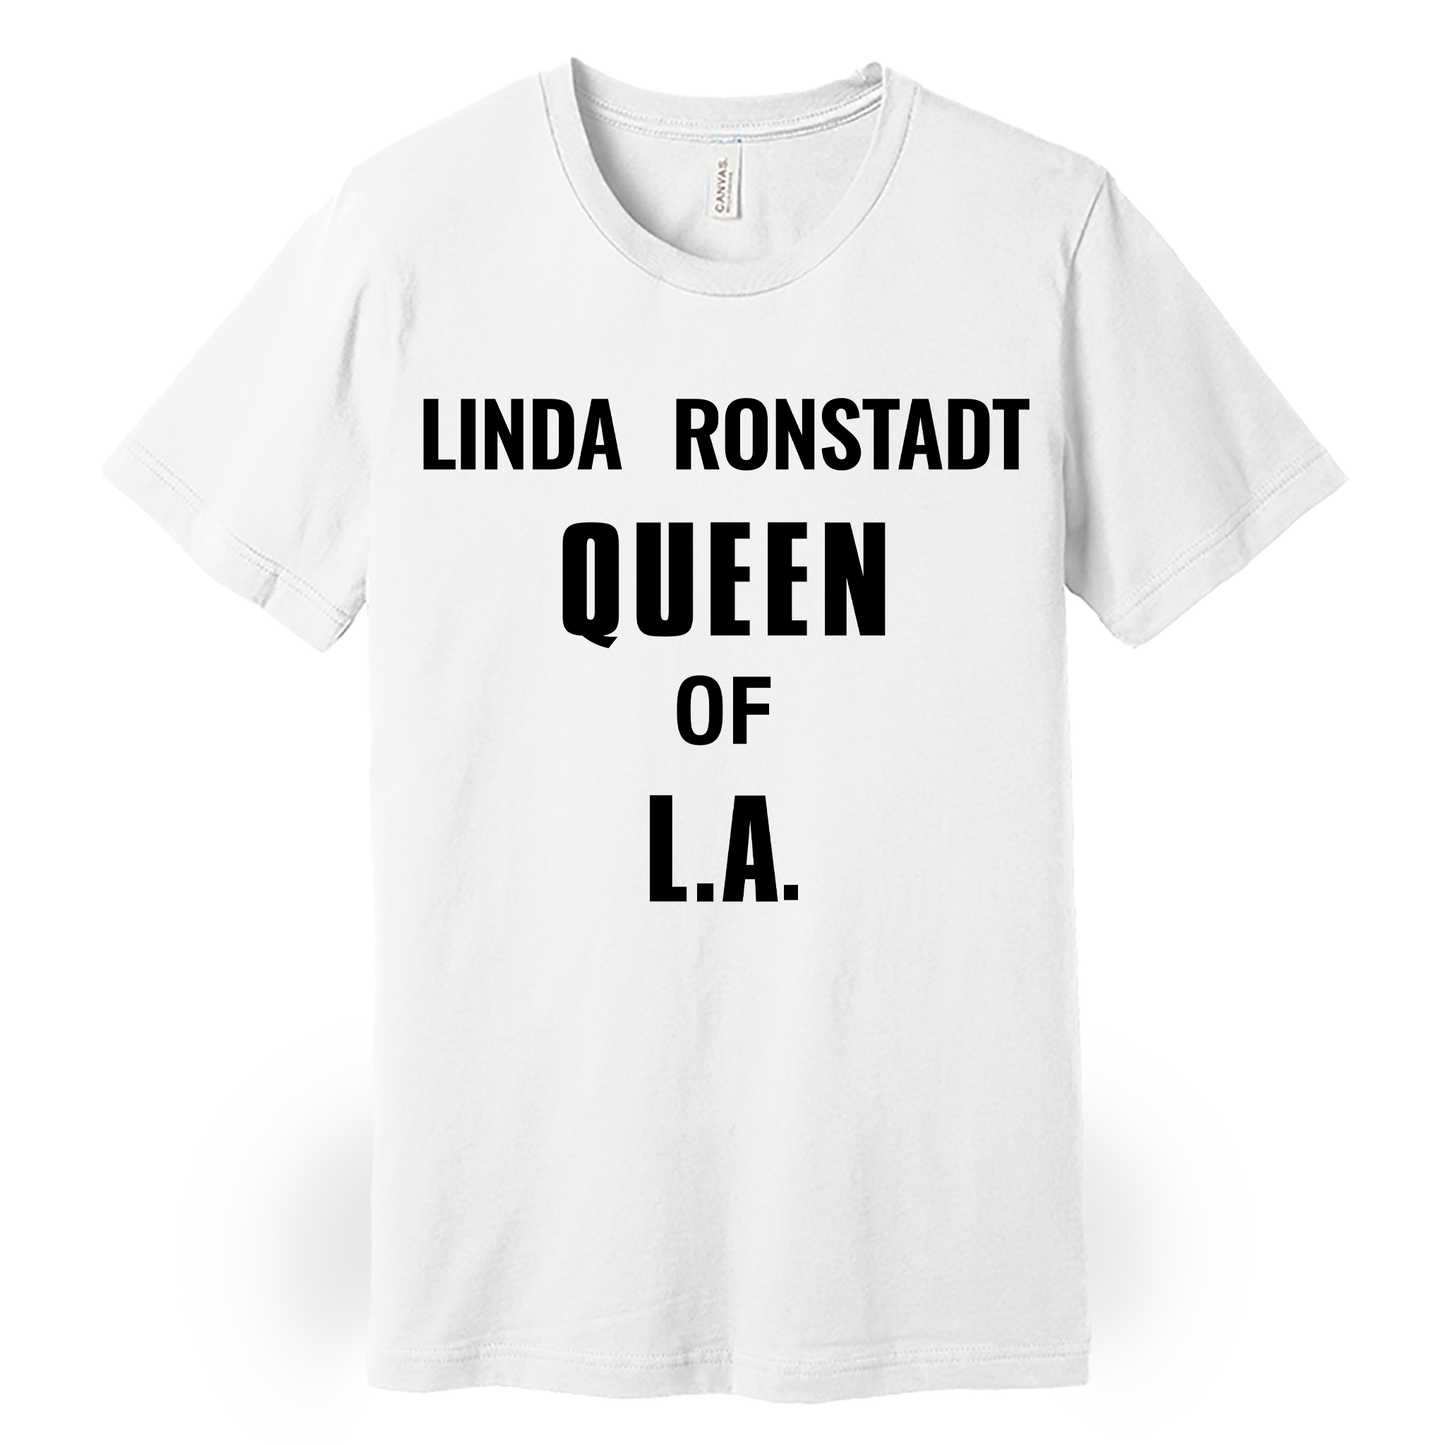 Linda Ronstadt Queen of L.A. T-Shirt - White